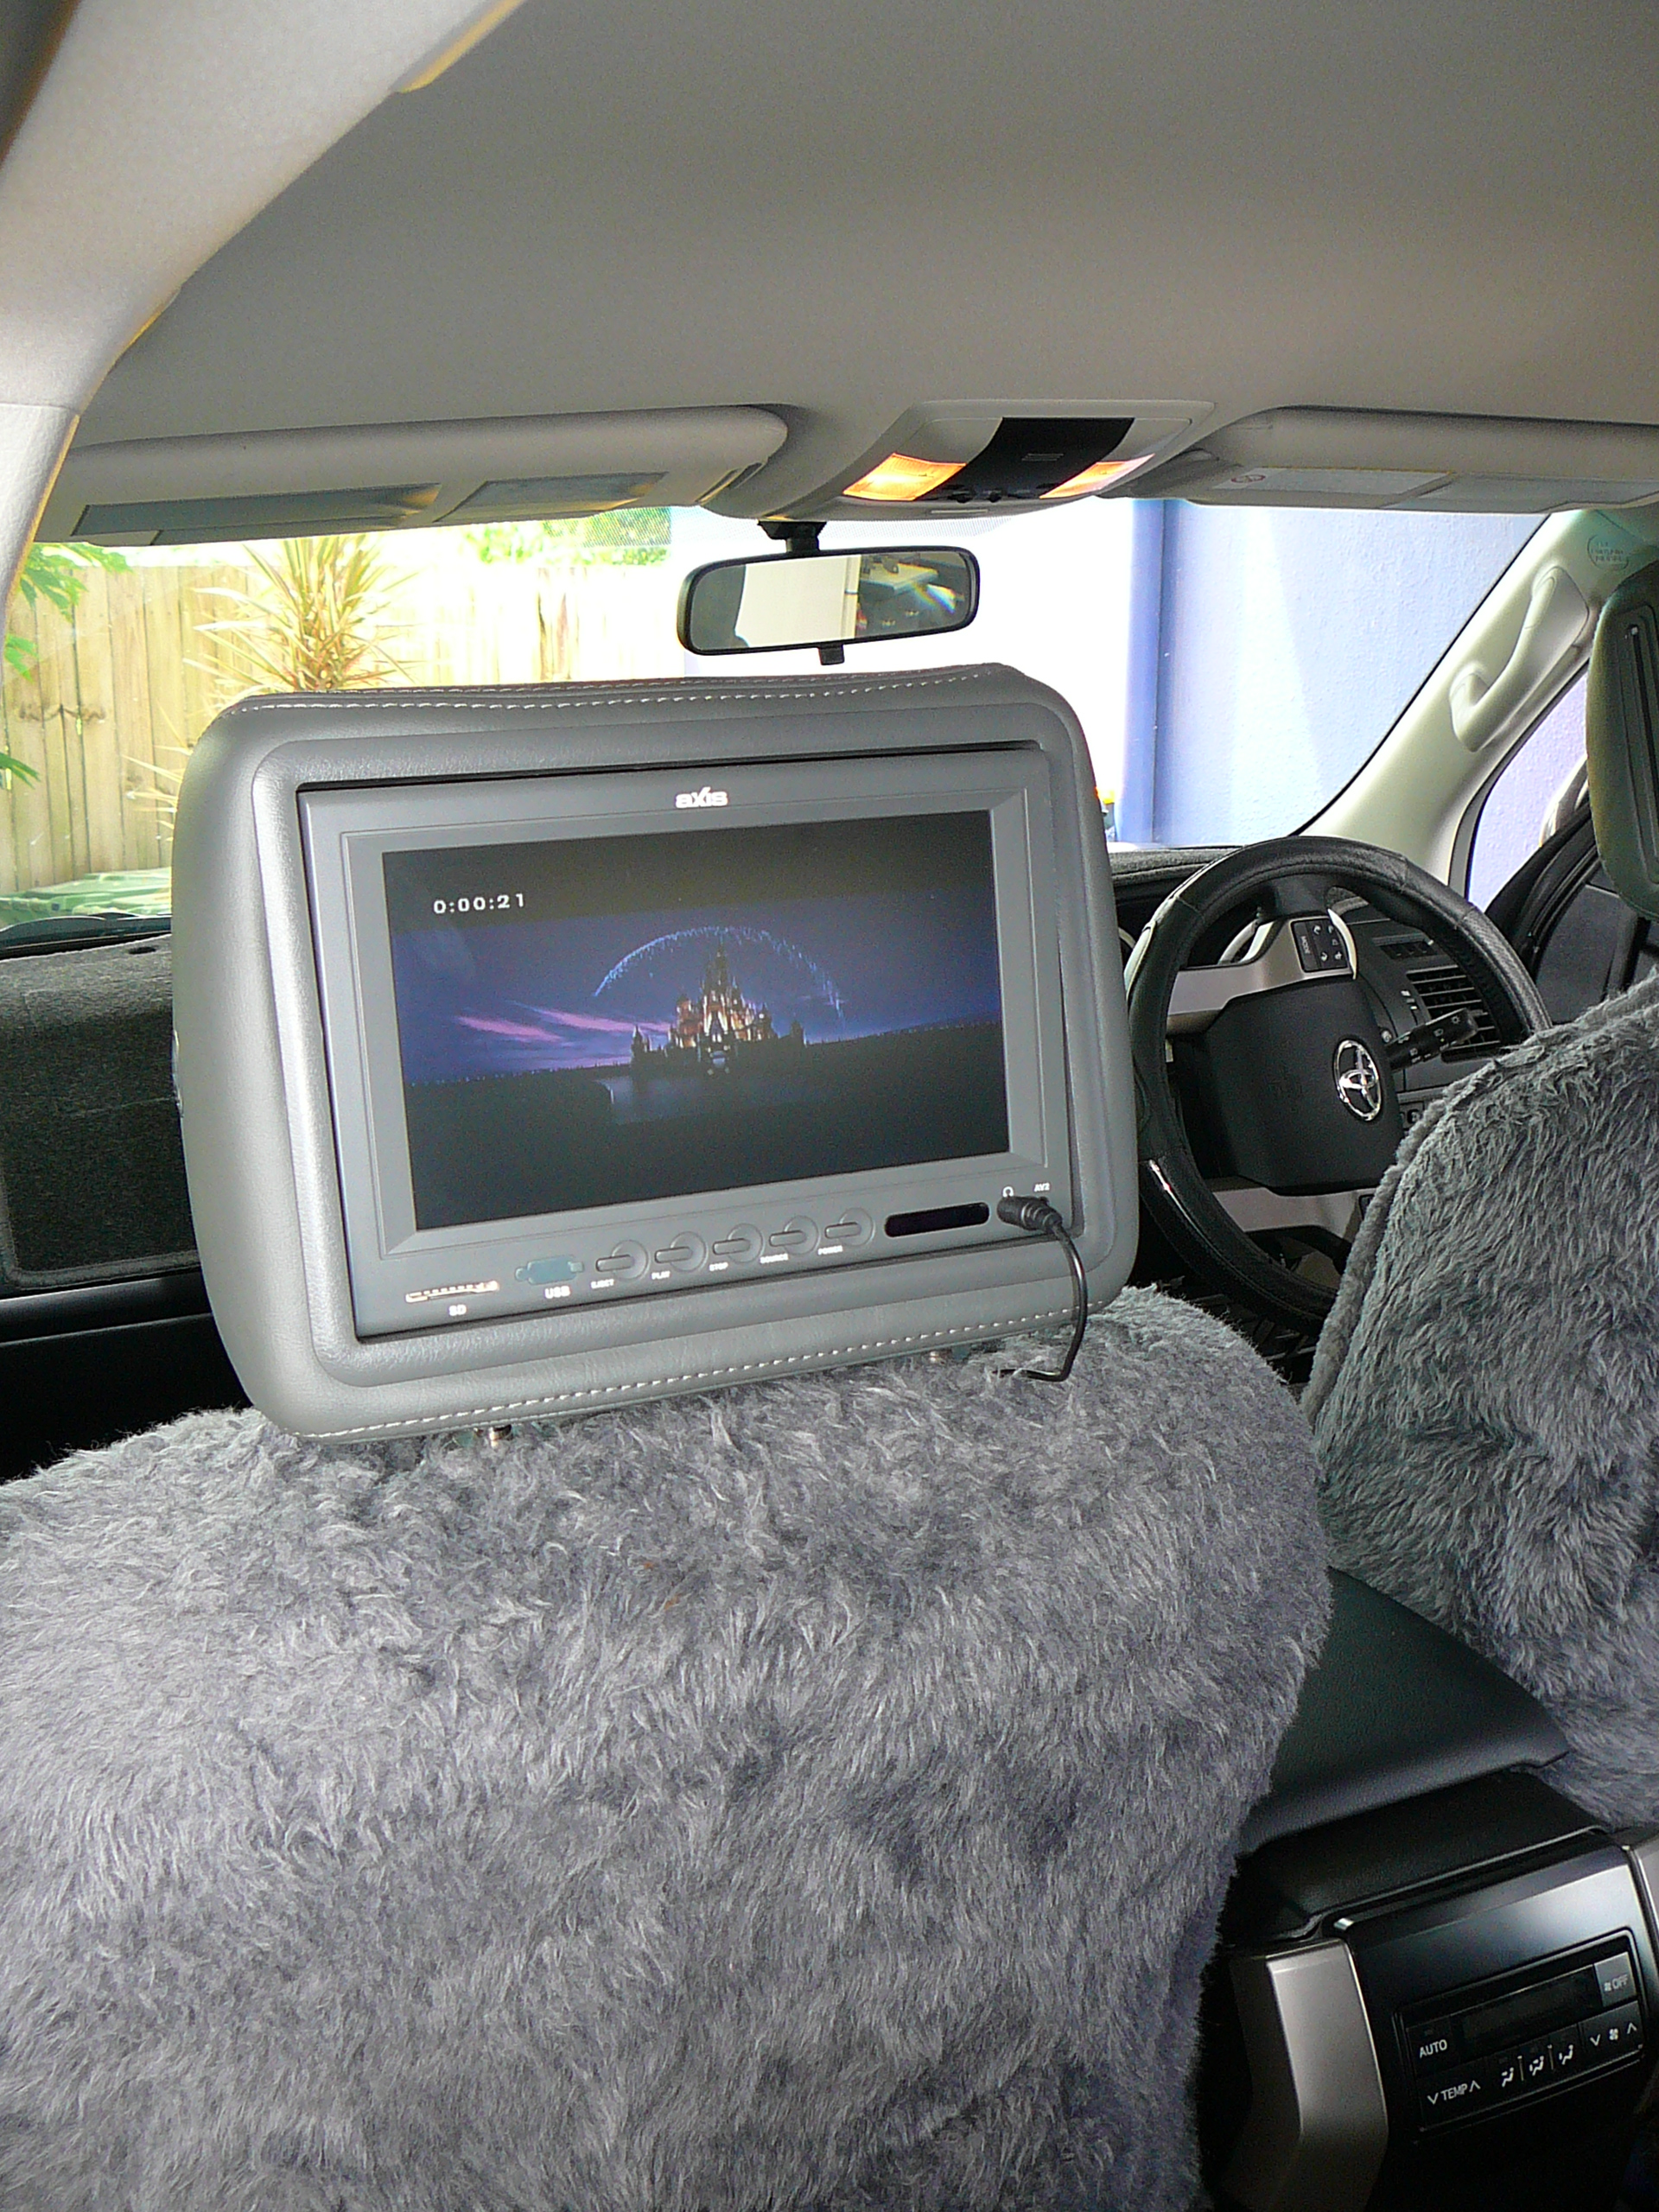 Toyota Prado 2012 150 series, Axis AX 985-2 HR DVD Headrest Screens